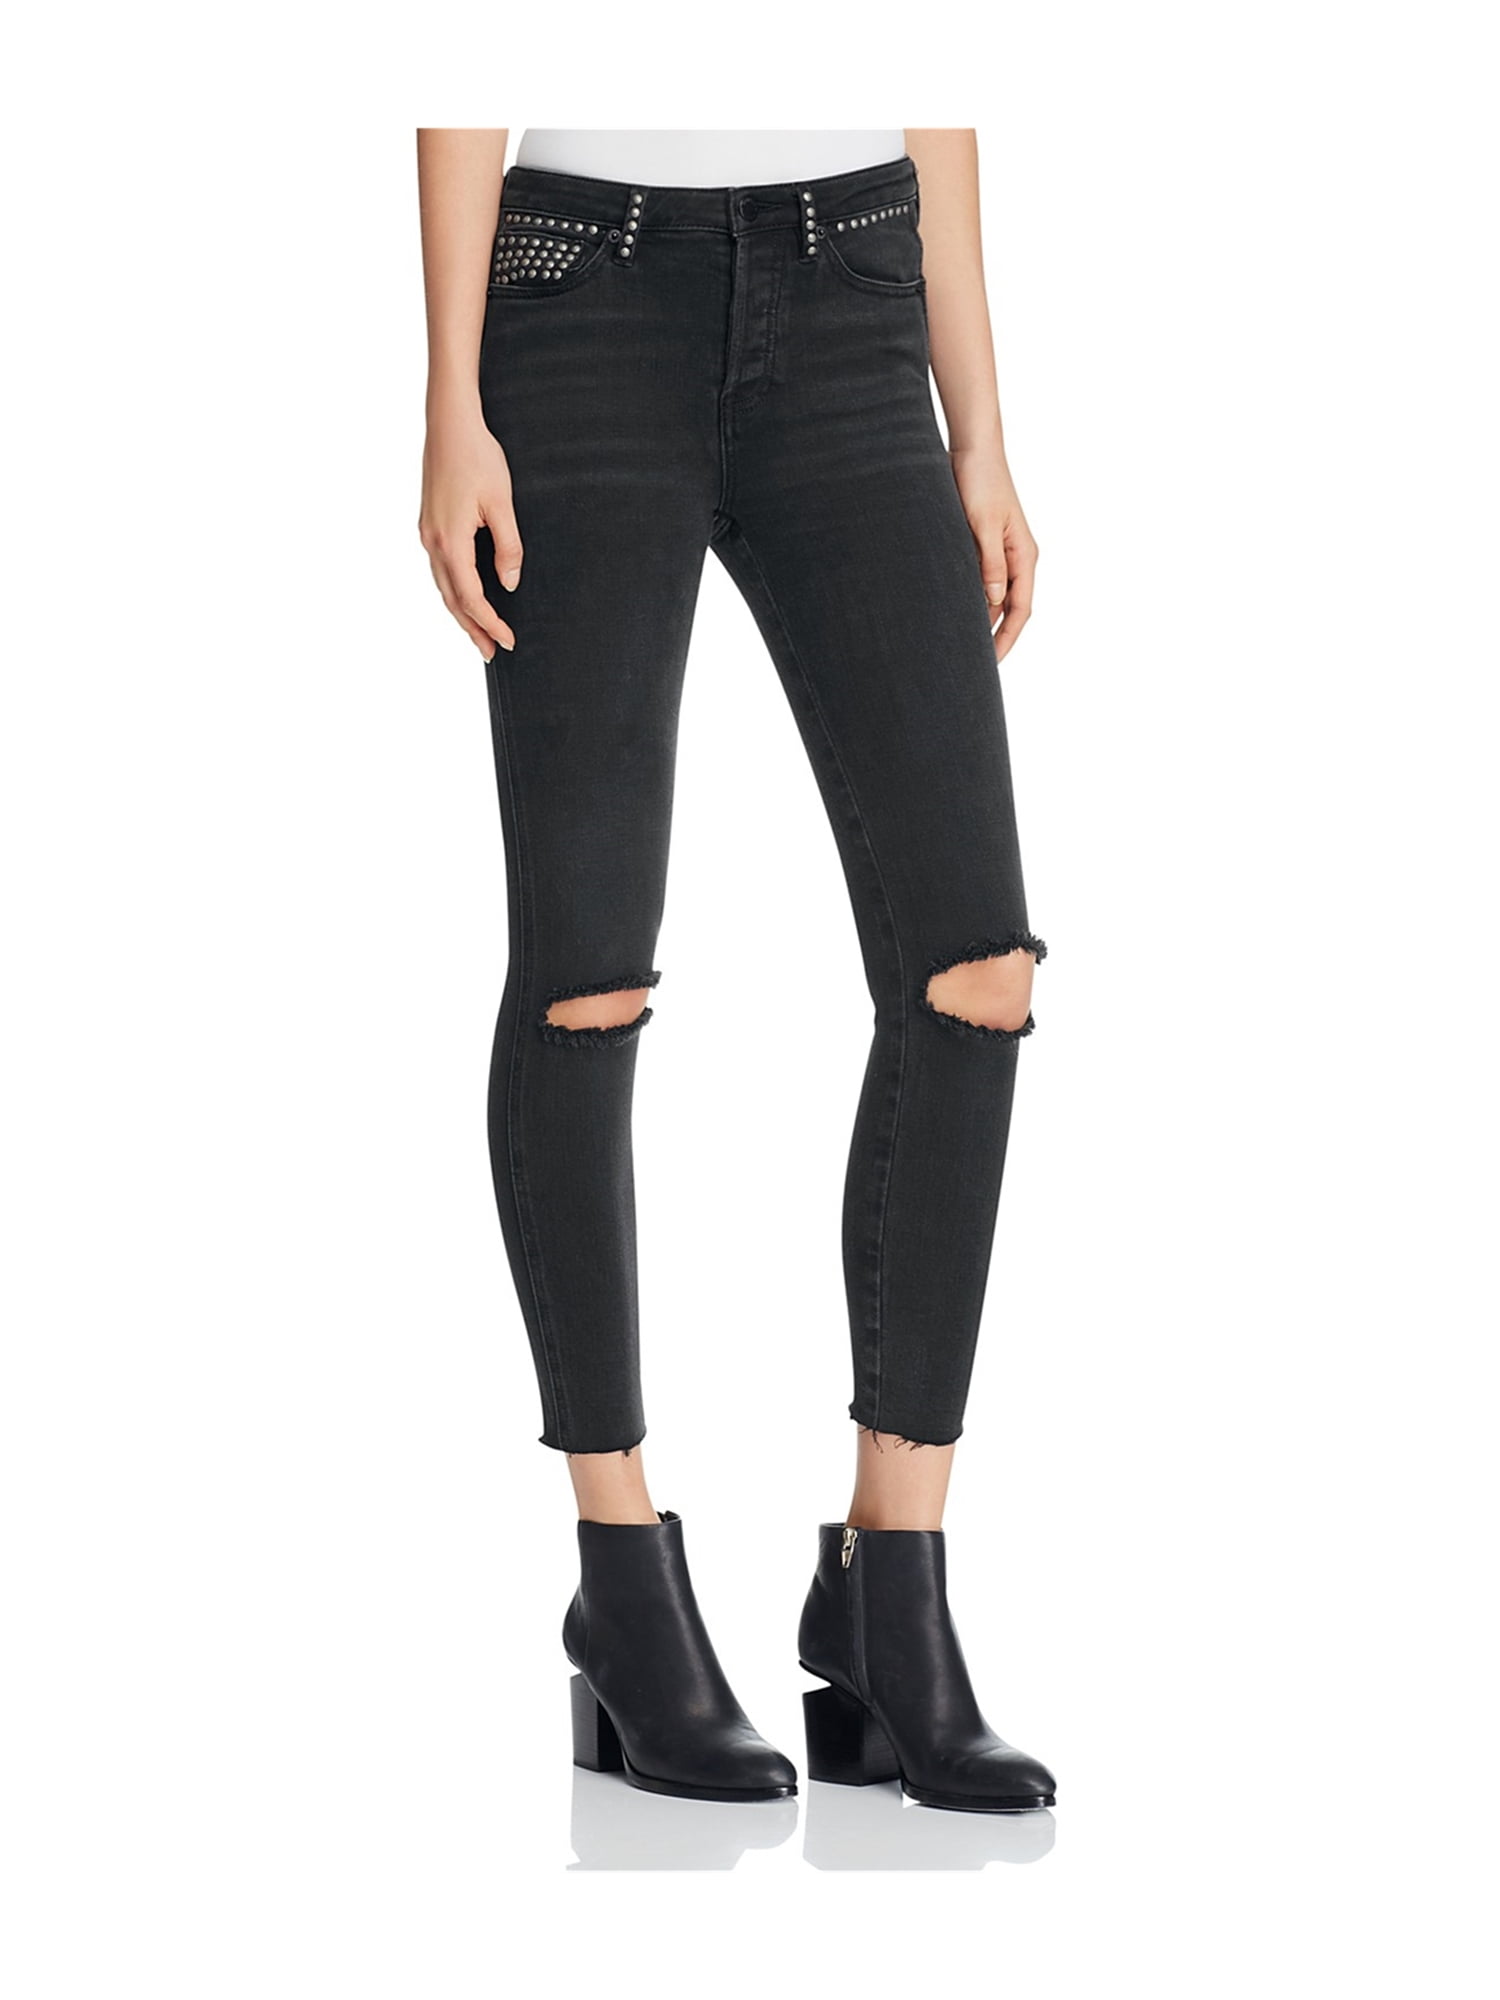 Free People Womens Ripped Skinny Fit Jeans black 29x27 | Walmart Canada